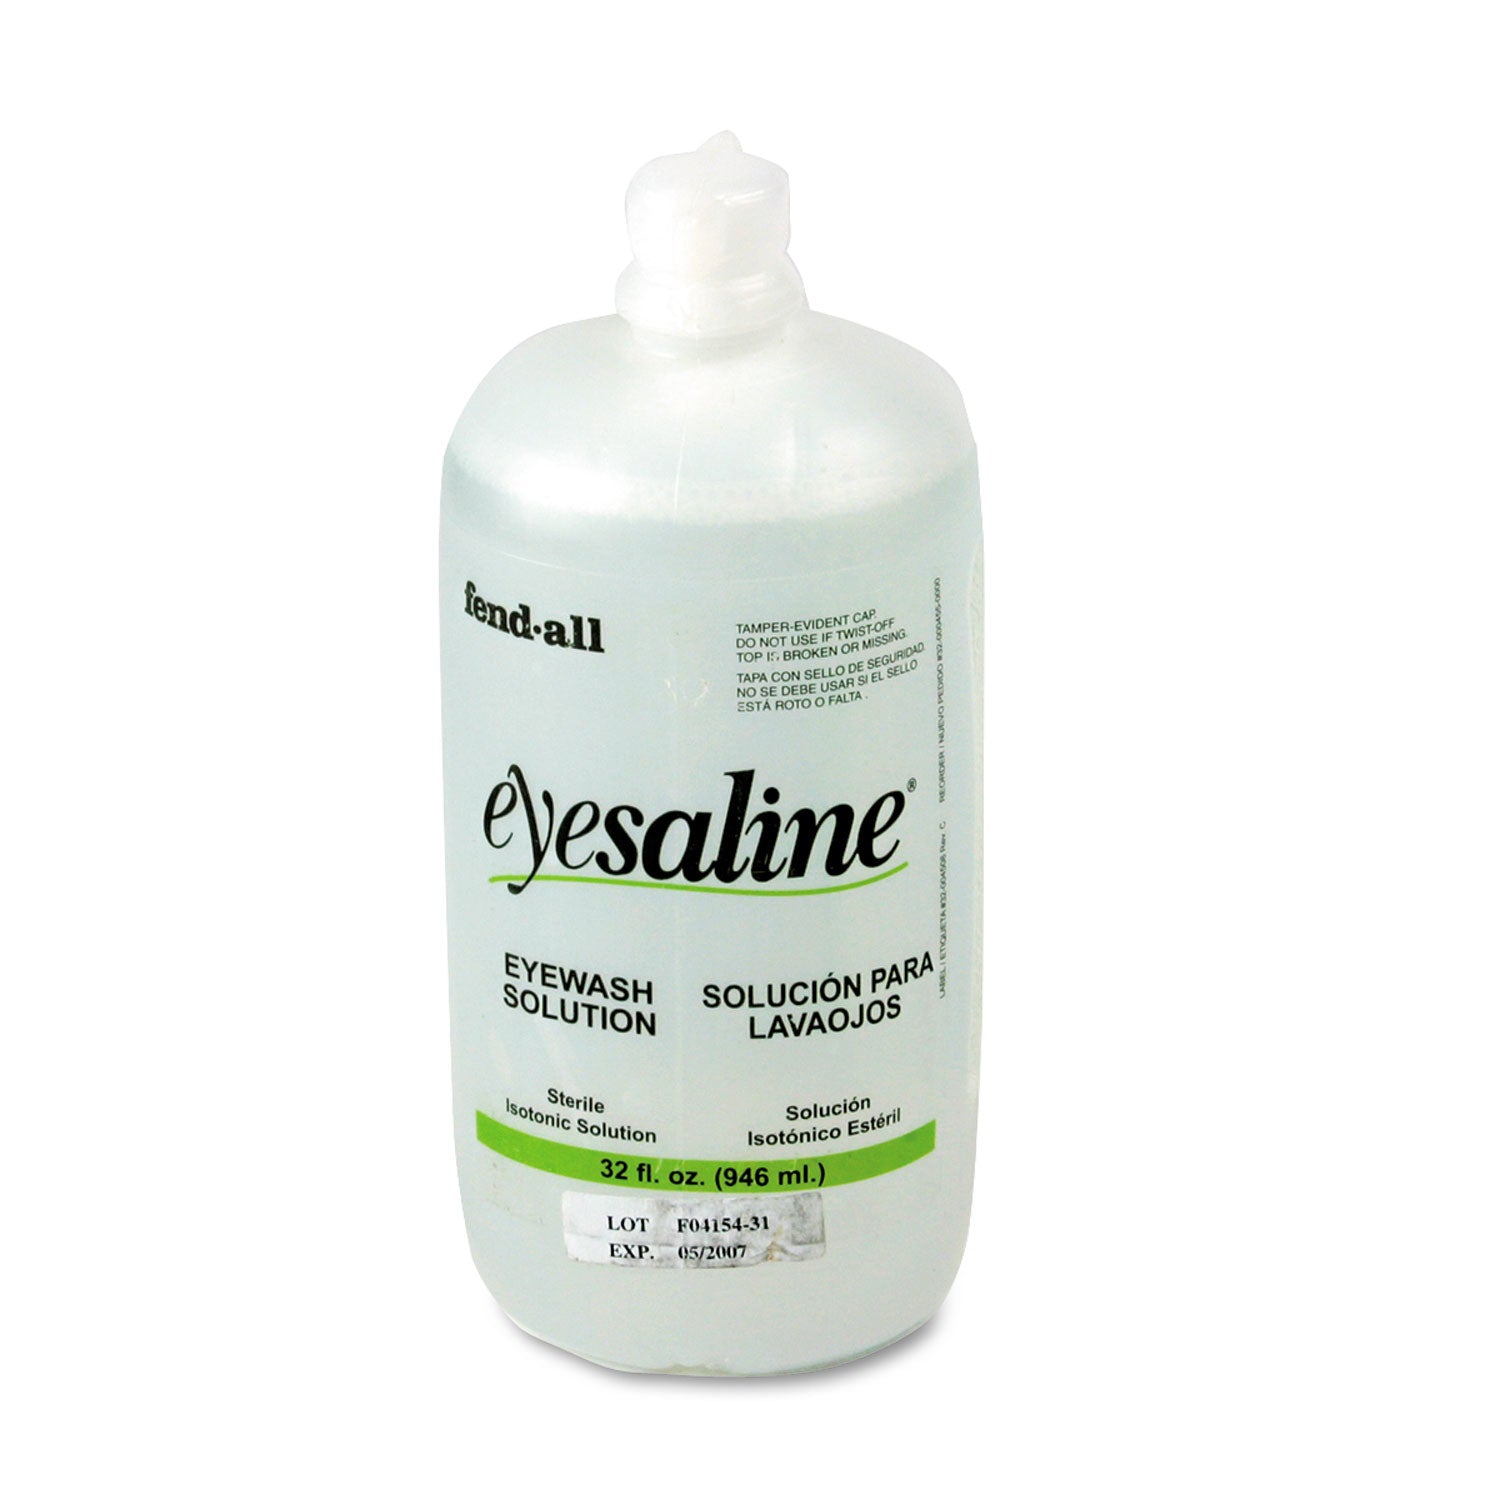 fendall-eyesaline-eyewash-bottle-refill-32-oz-bottle-12-carton_fnd320004550000 - 1